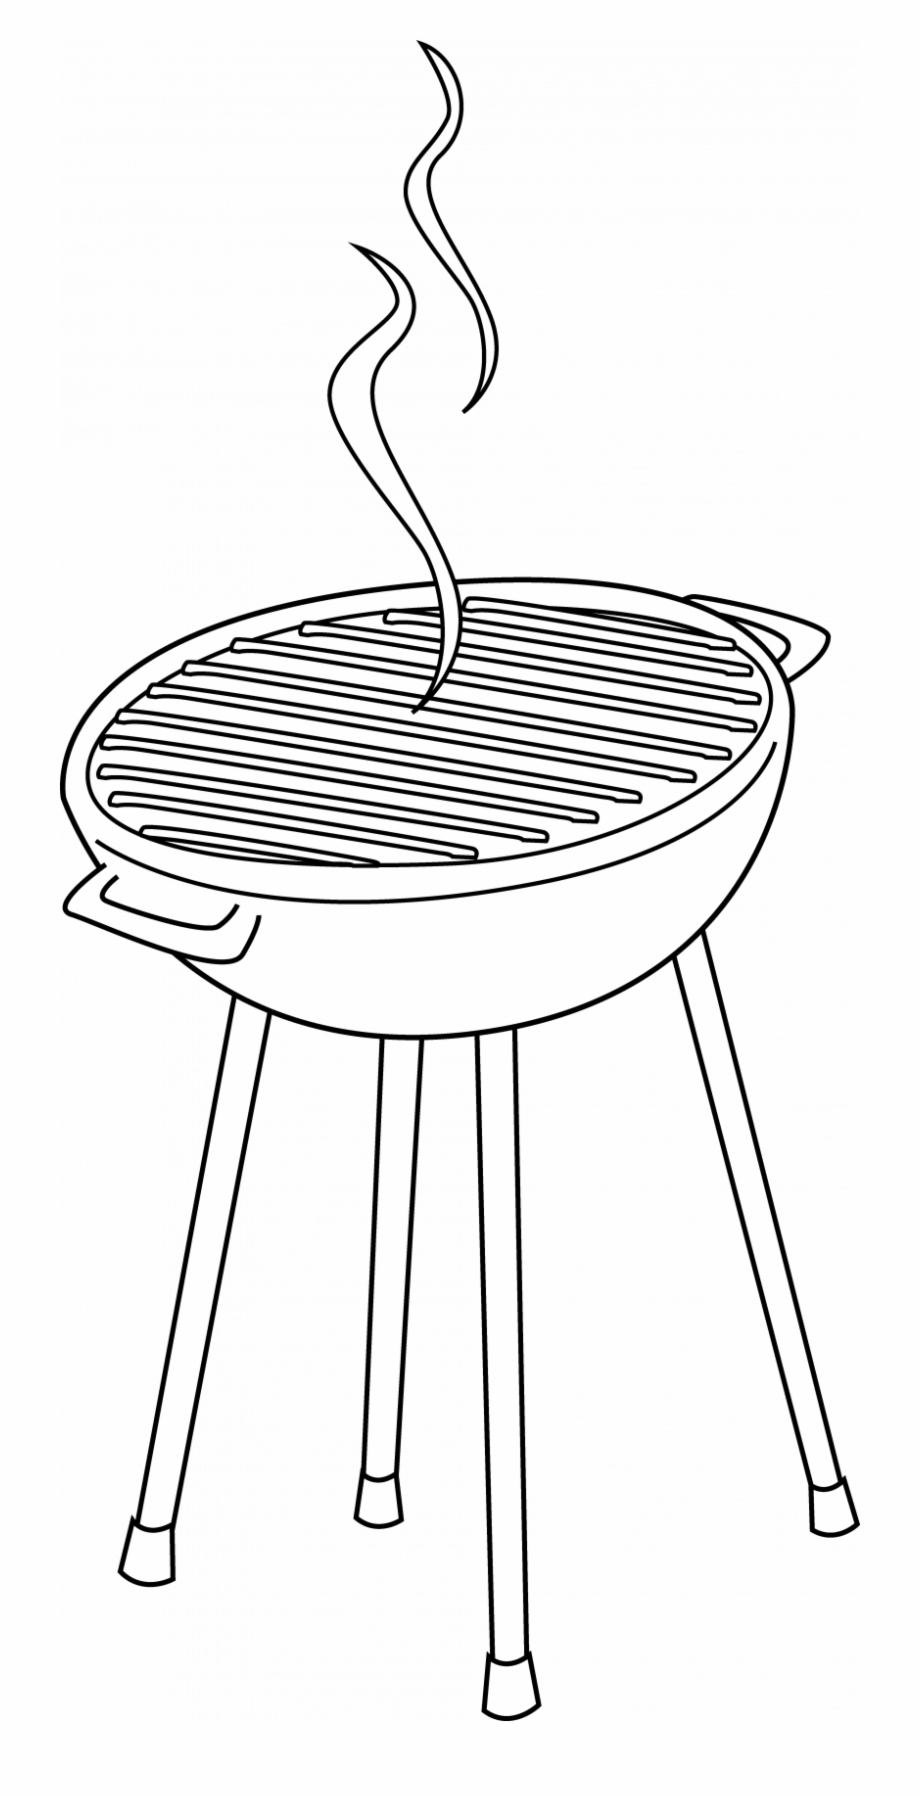 Barbeque grill clip.